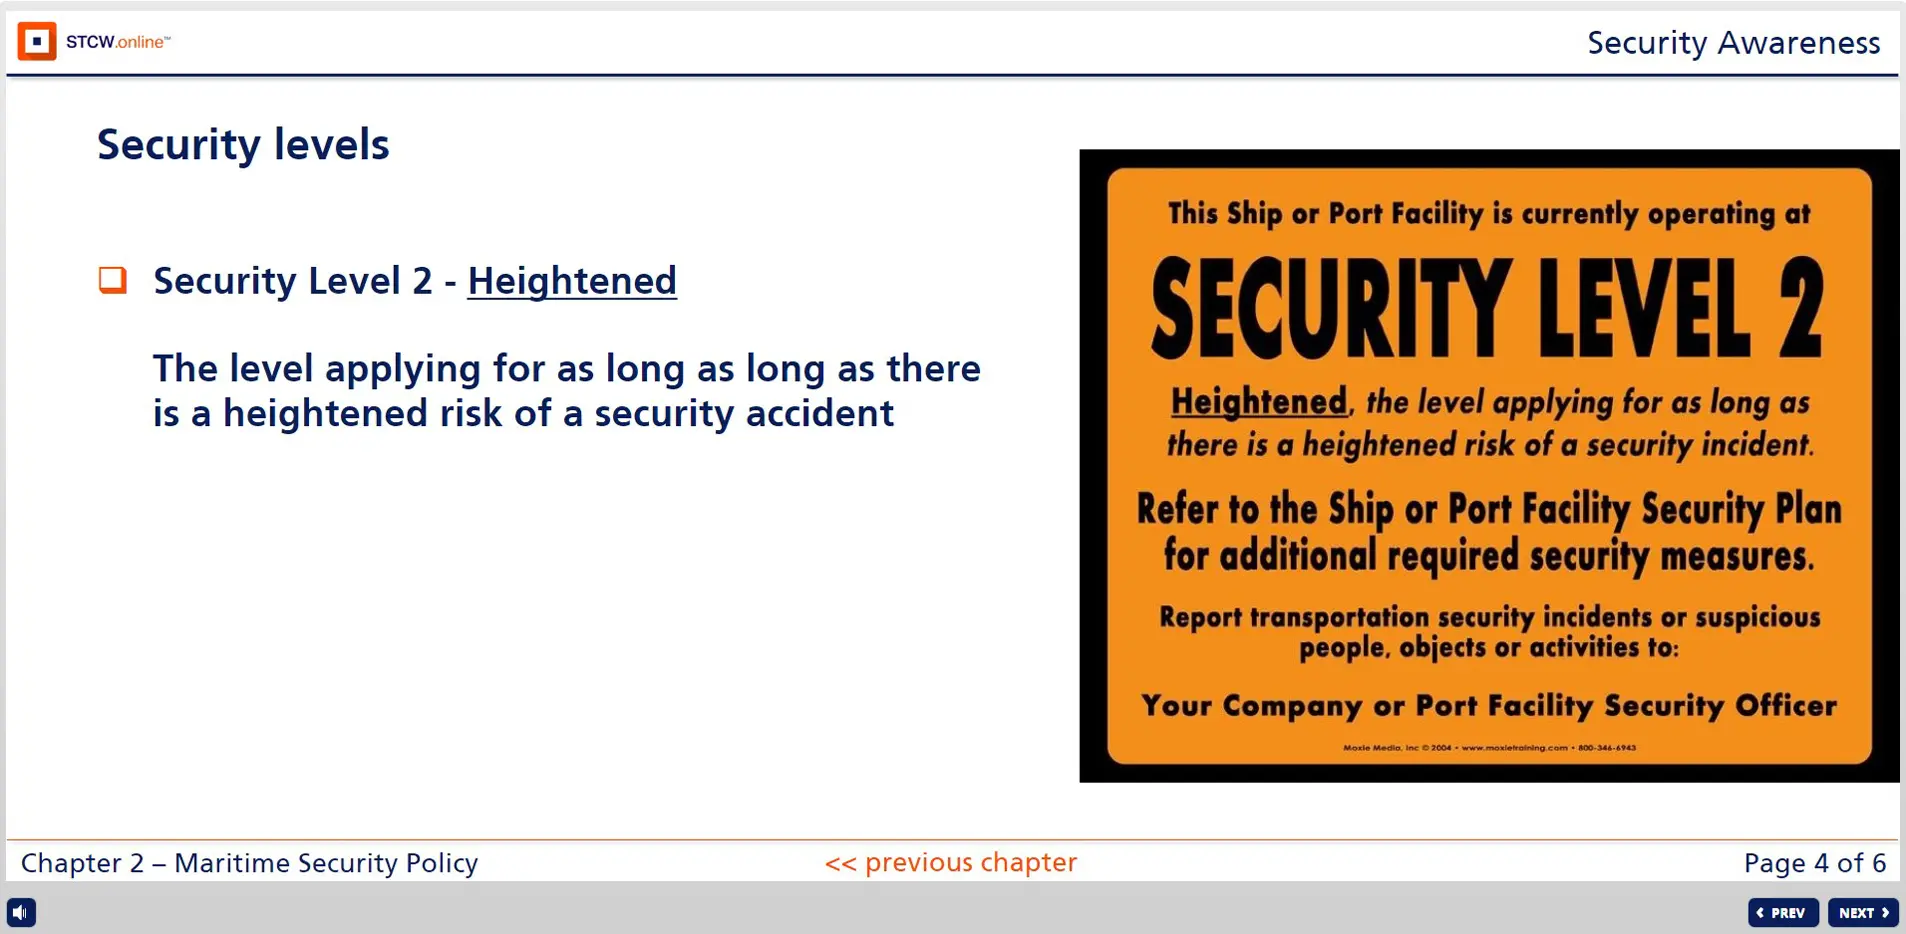 SecurityAwareness slide 5